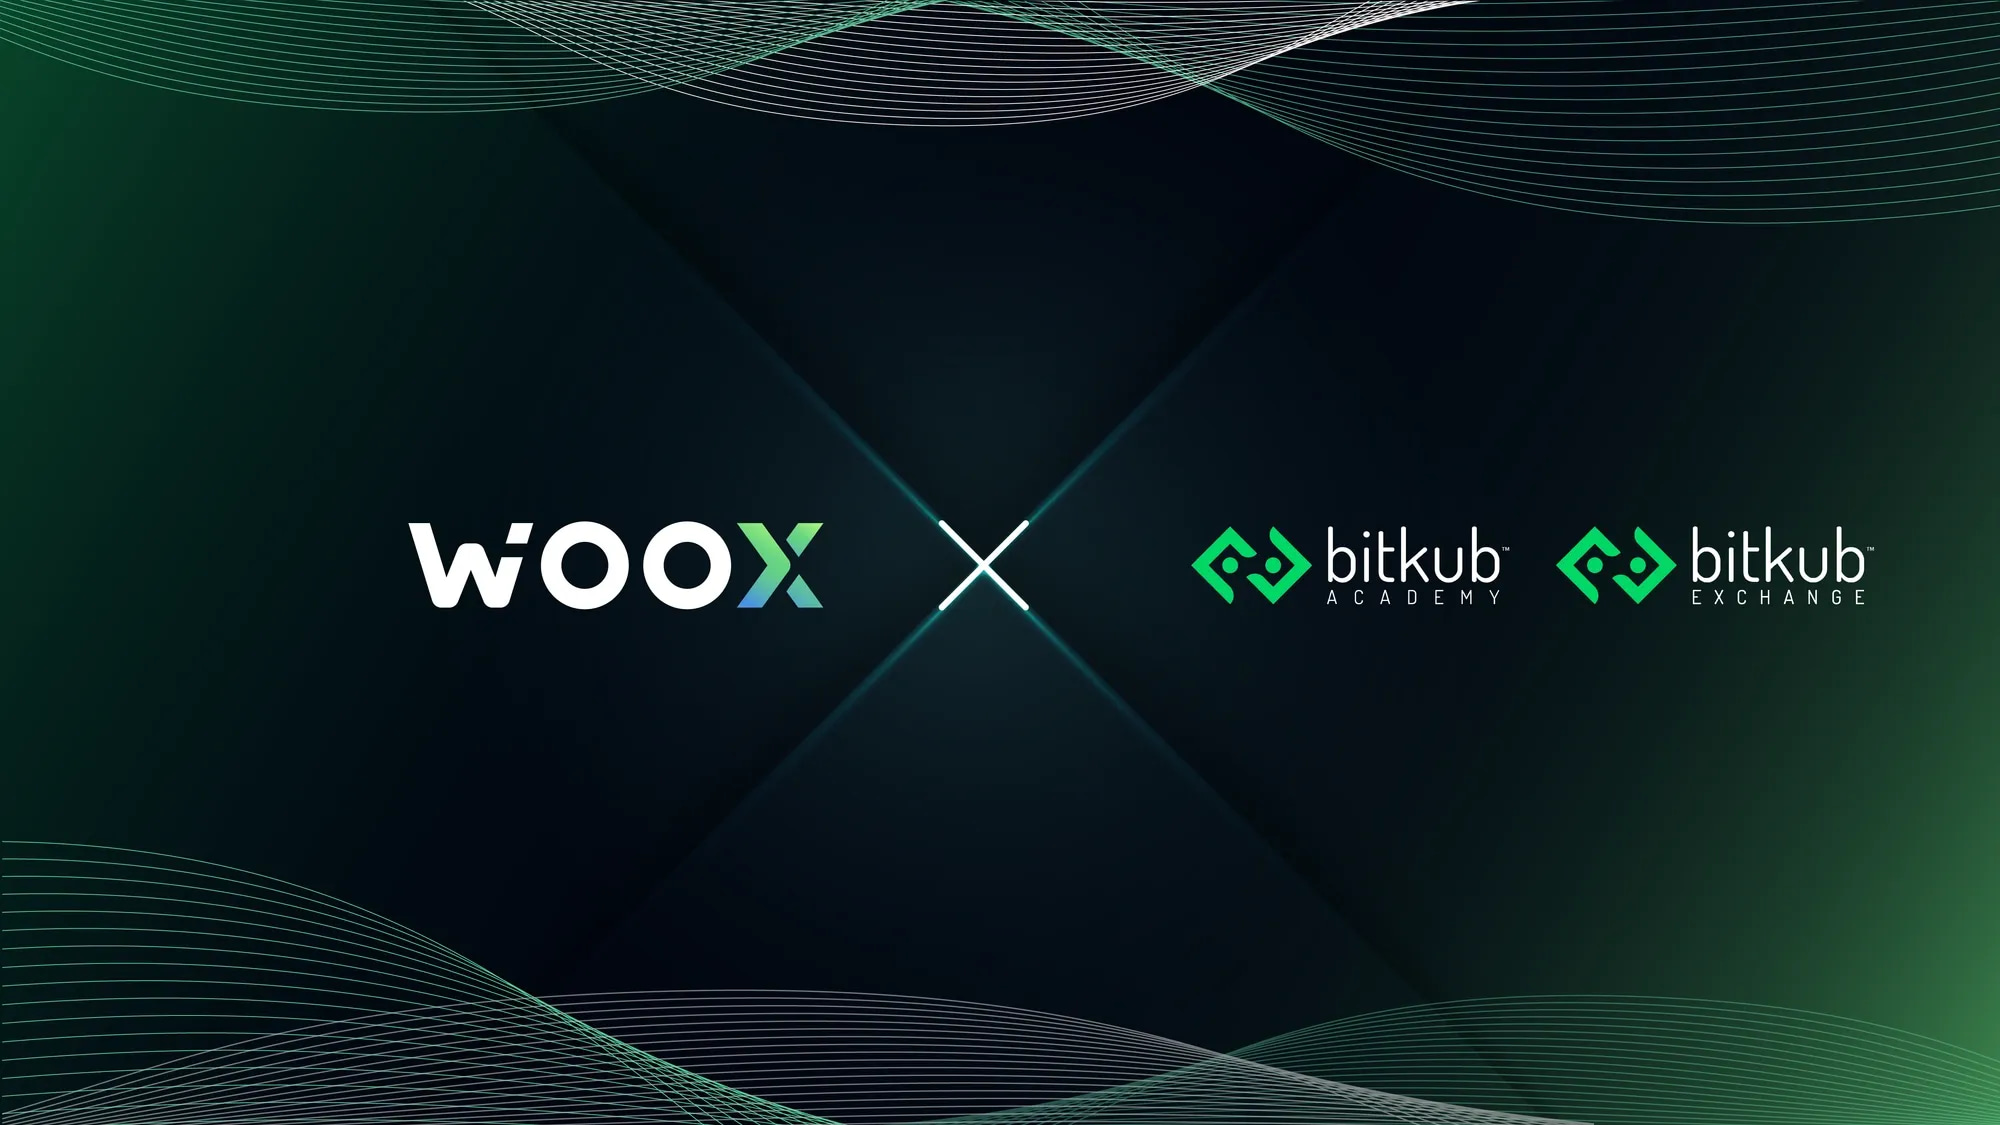 Bitkub 交易所和 Bitkub 學院與 WOO 合作，攜手提倡區塊鏈和 Web 3.0 教育